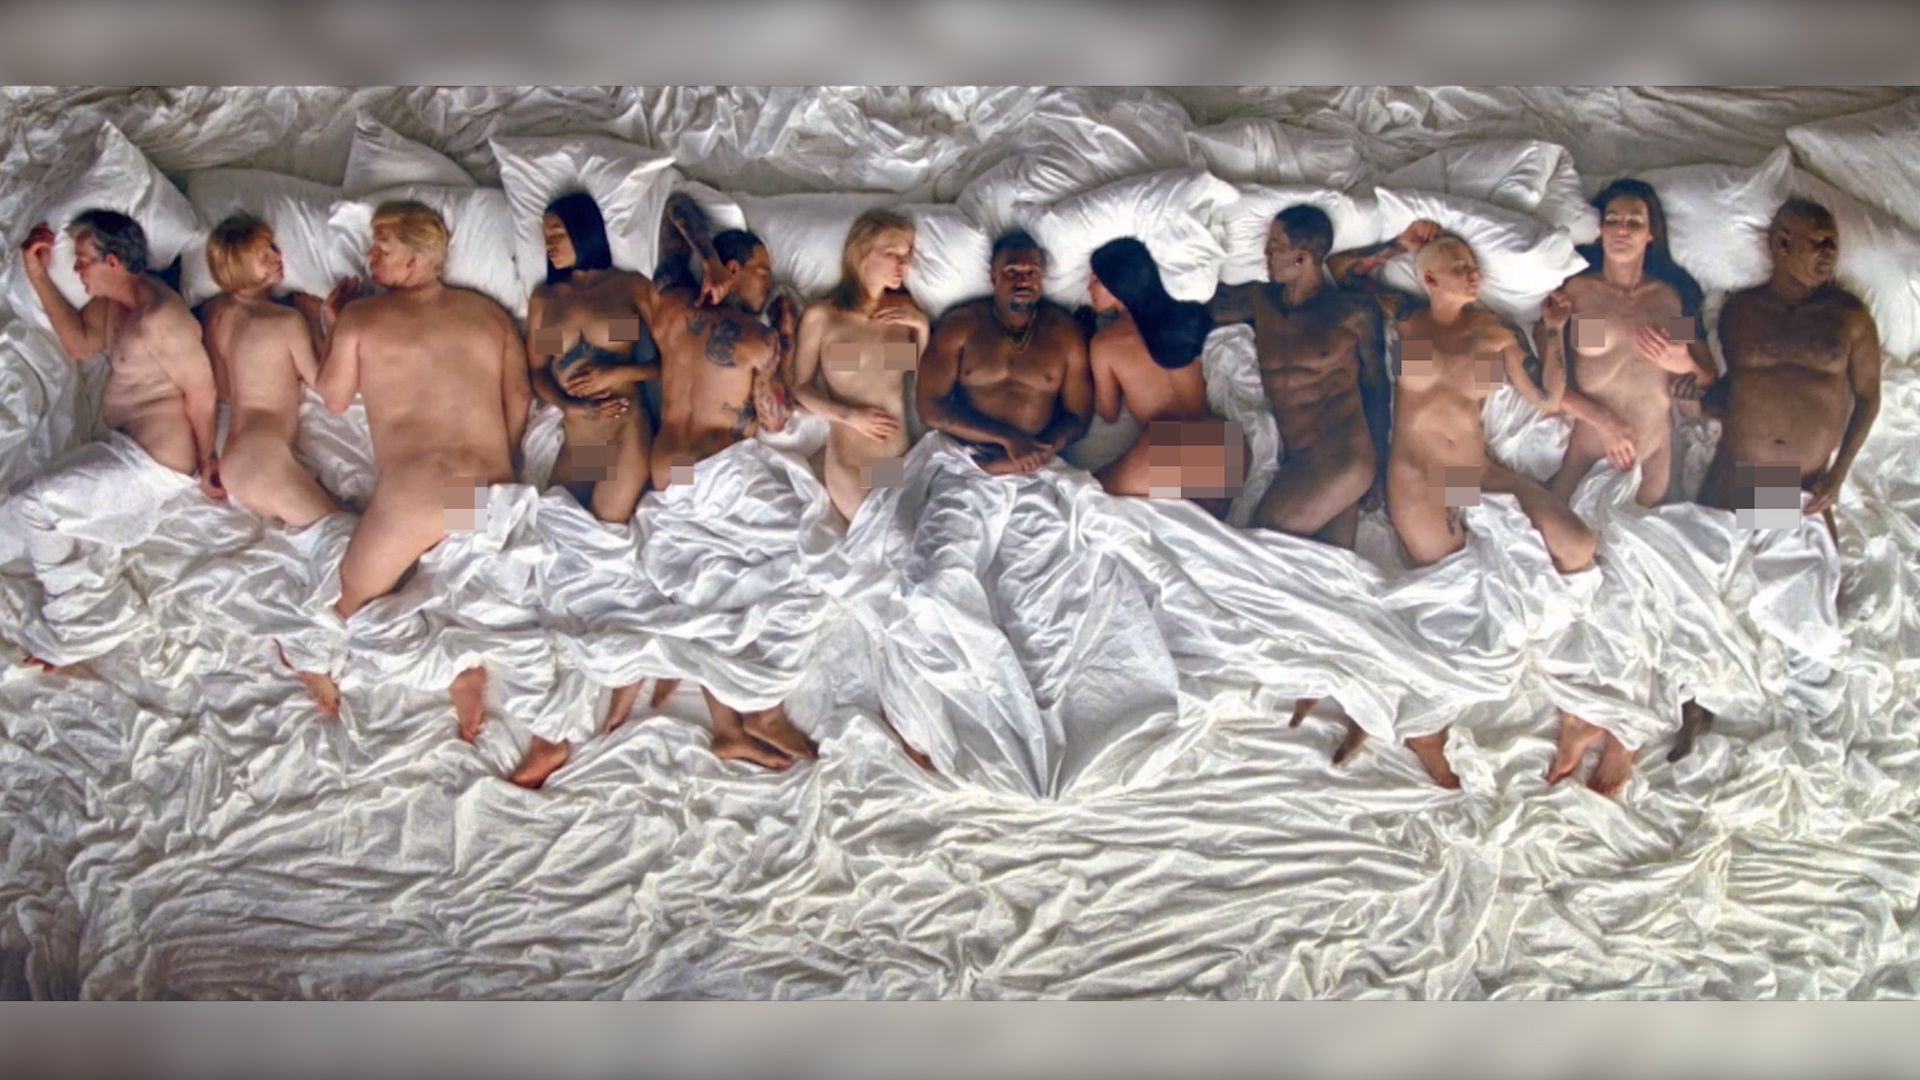 Xxx New Taylor Swift Video - Lena Dunham slams Kanye West's new 'Famous' music video | CNN